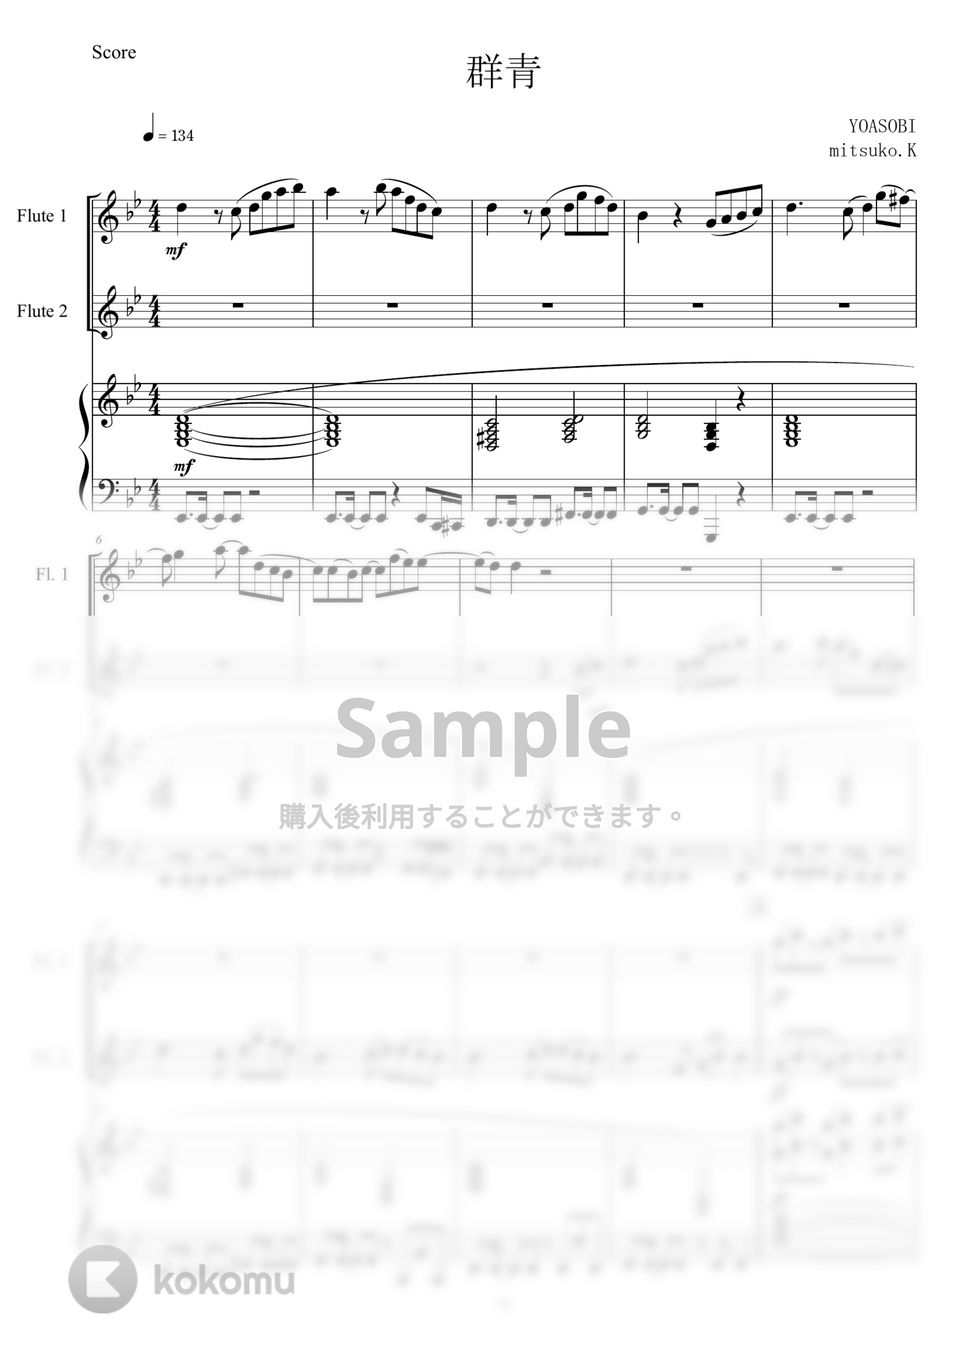 ayase - 群青 (フルートデュオ＋ピアノ) by mitsuko.K